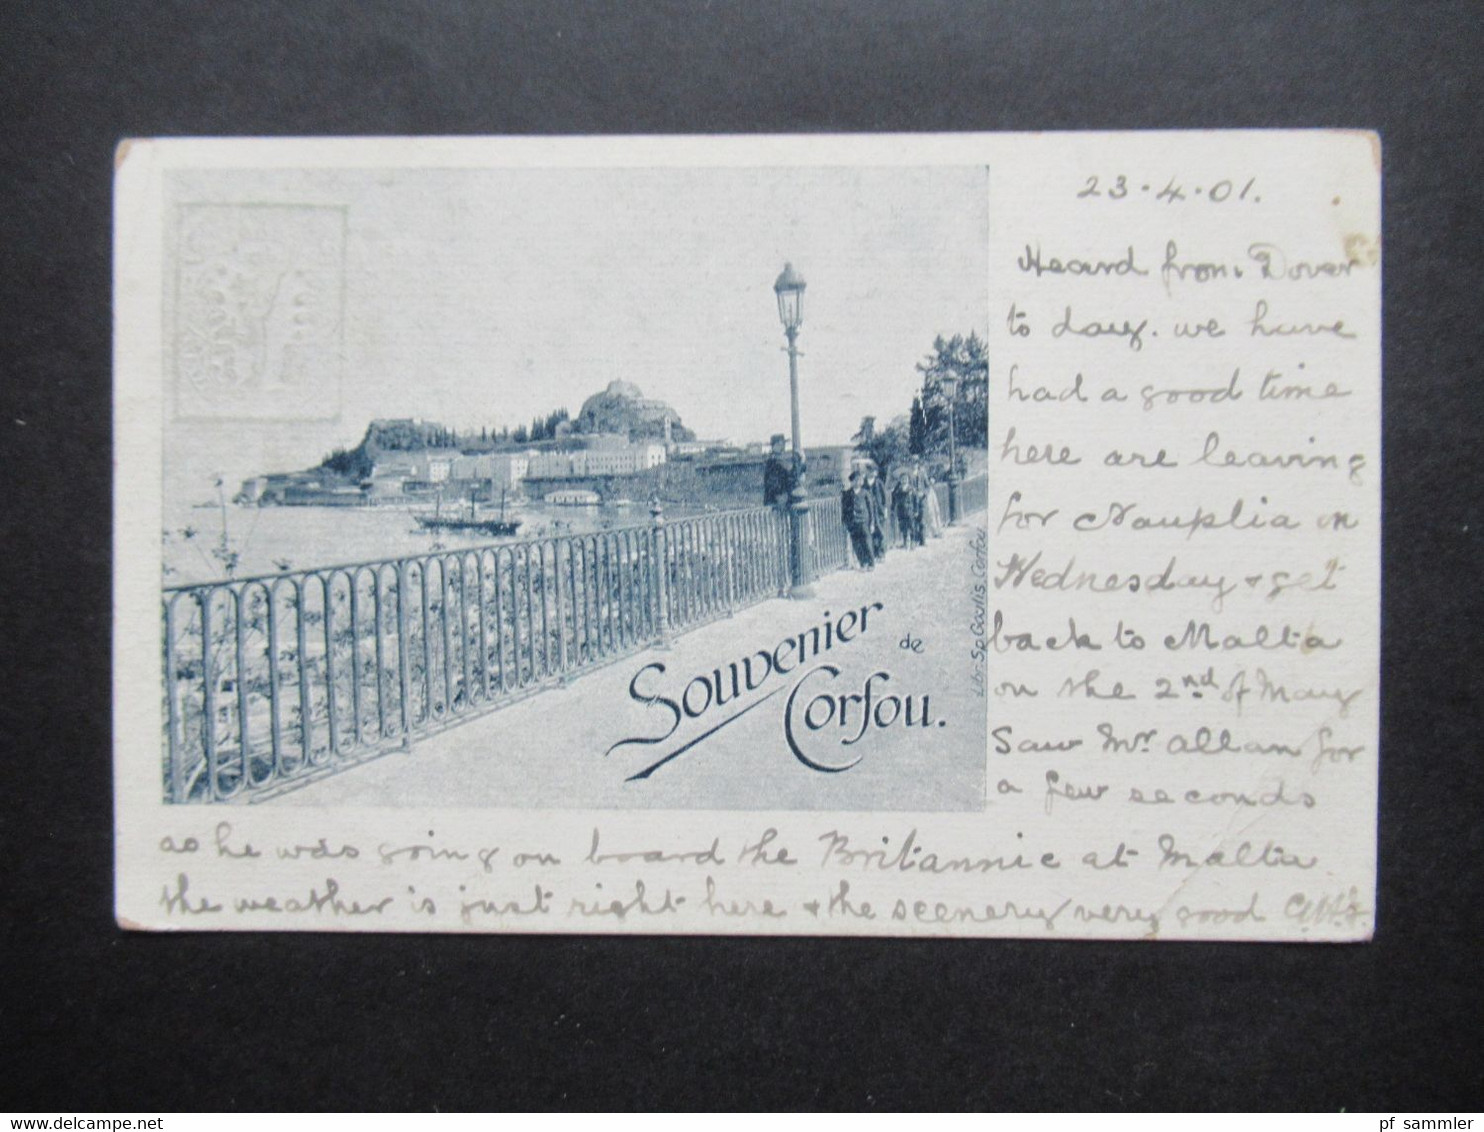 Griechenland 1901 Ganzsache / Bildpostkarte Souvenir De Corfou Libr. Sp. Goulis Corfou Nach Chatham England Gesendet - Ganzsachen